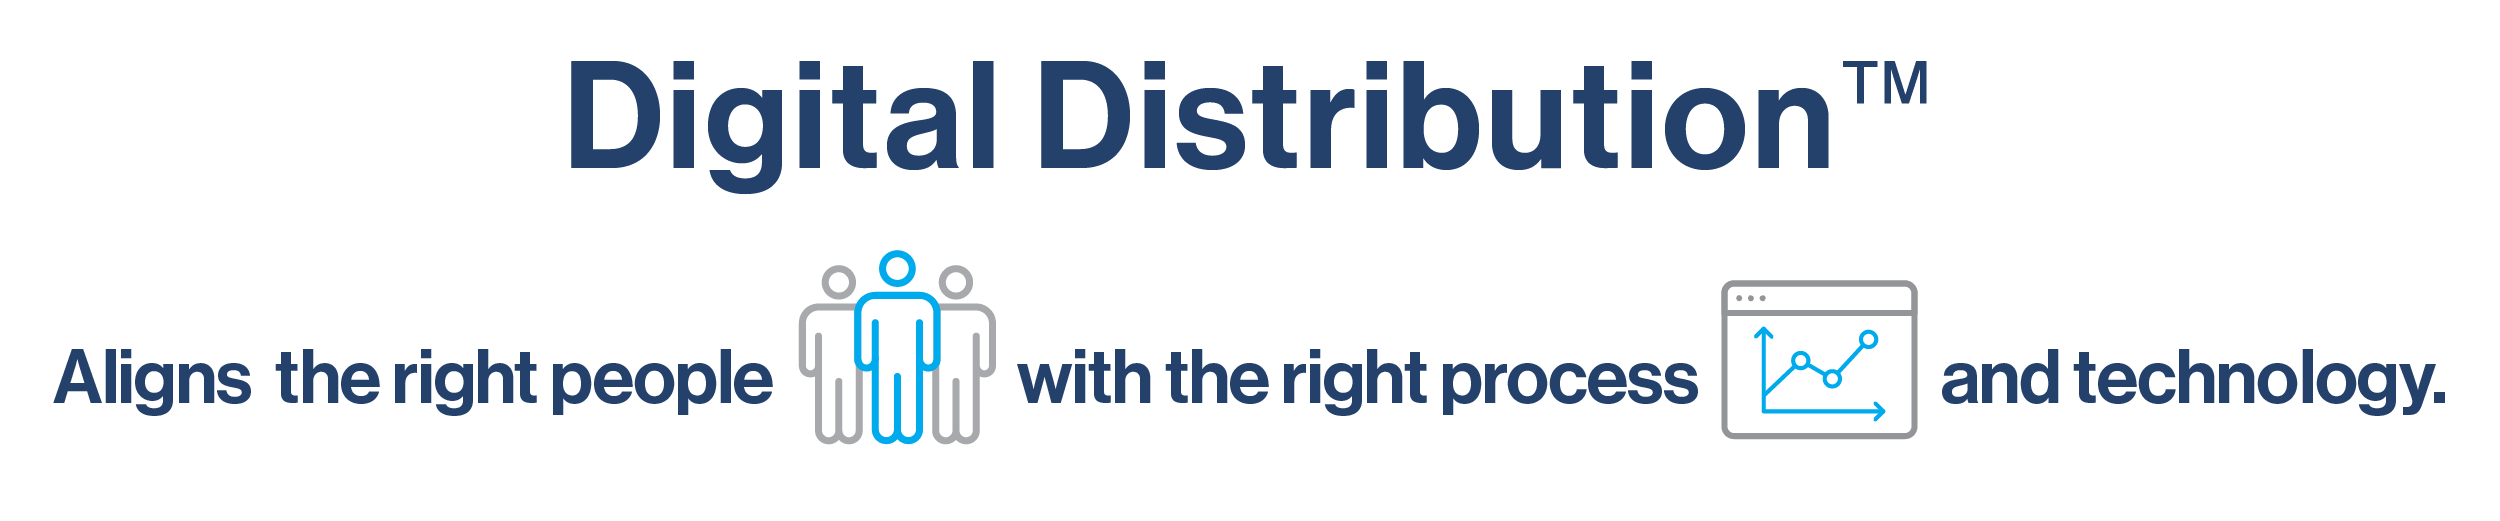 DRAFT - 6297 GK3 Blog - Dont hire another wholesaler_Digital Distribution Aligns